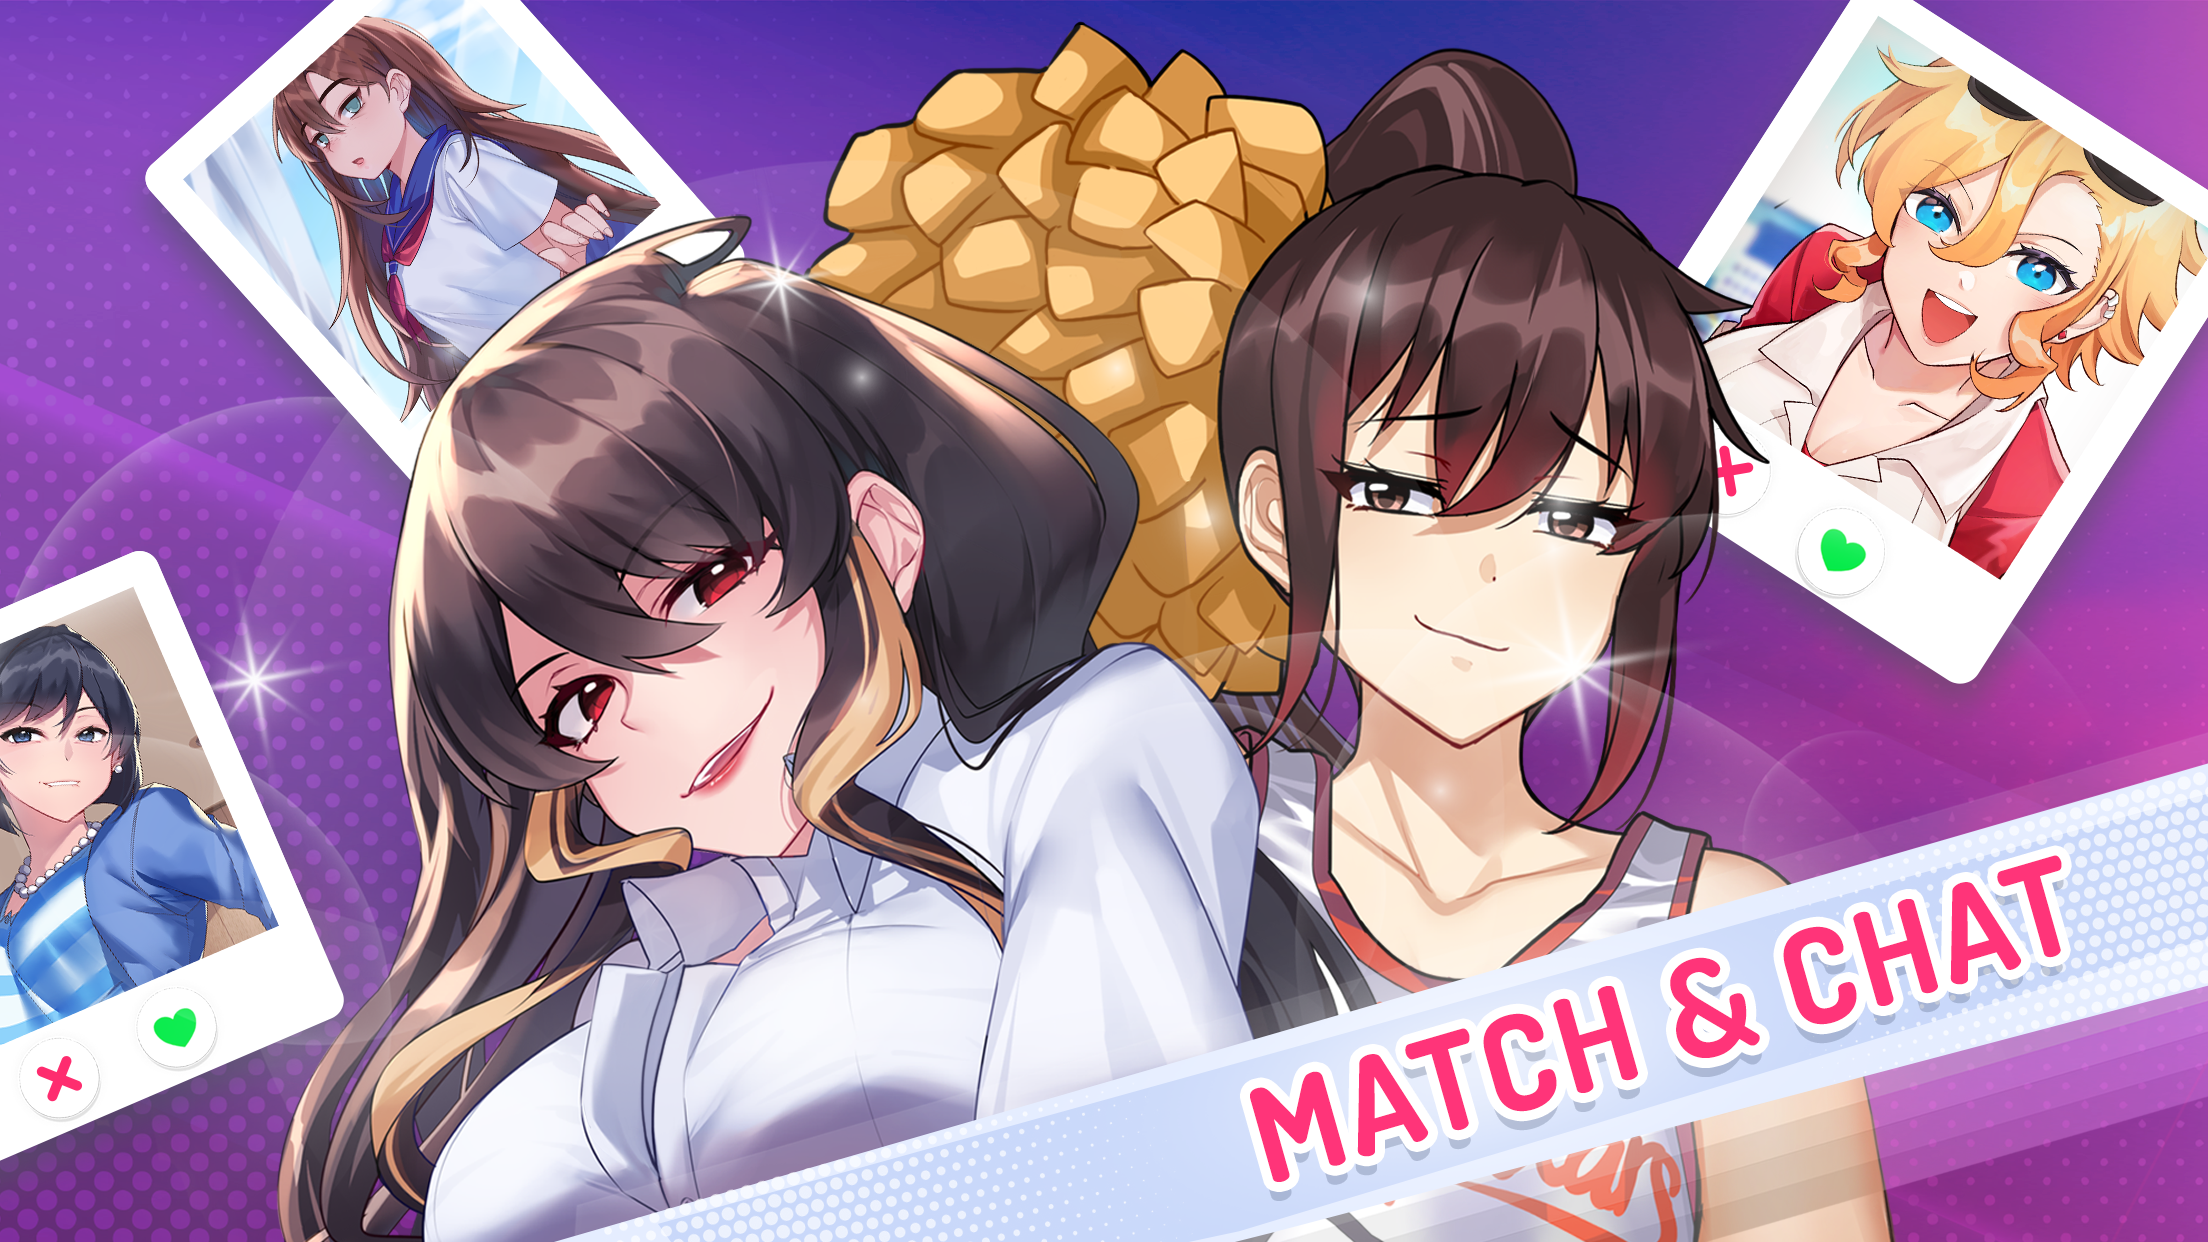 Full Service ☆ BL/Yaoi/Gay Game ☆ Dating Sim ☆ Visual Novel by Herculion —  Kickstarter